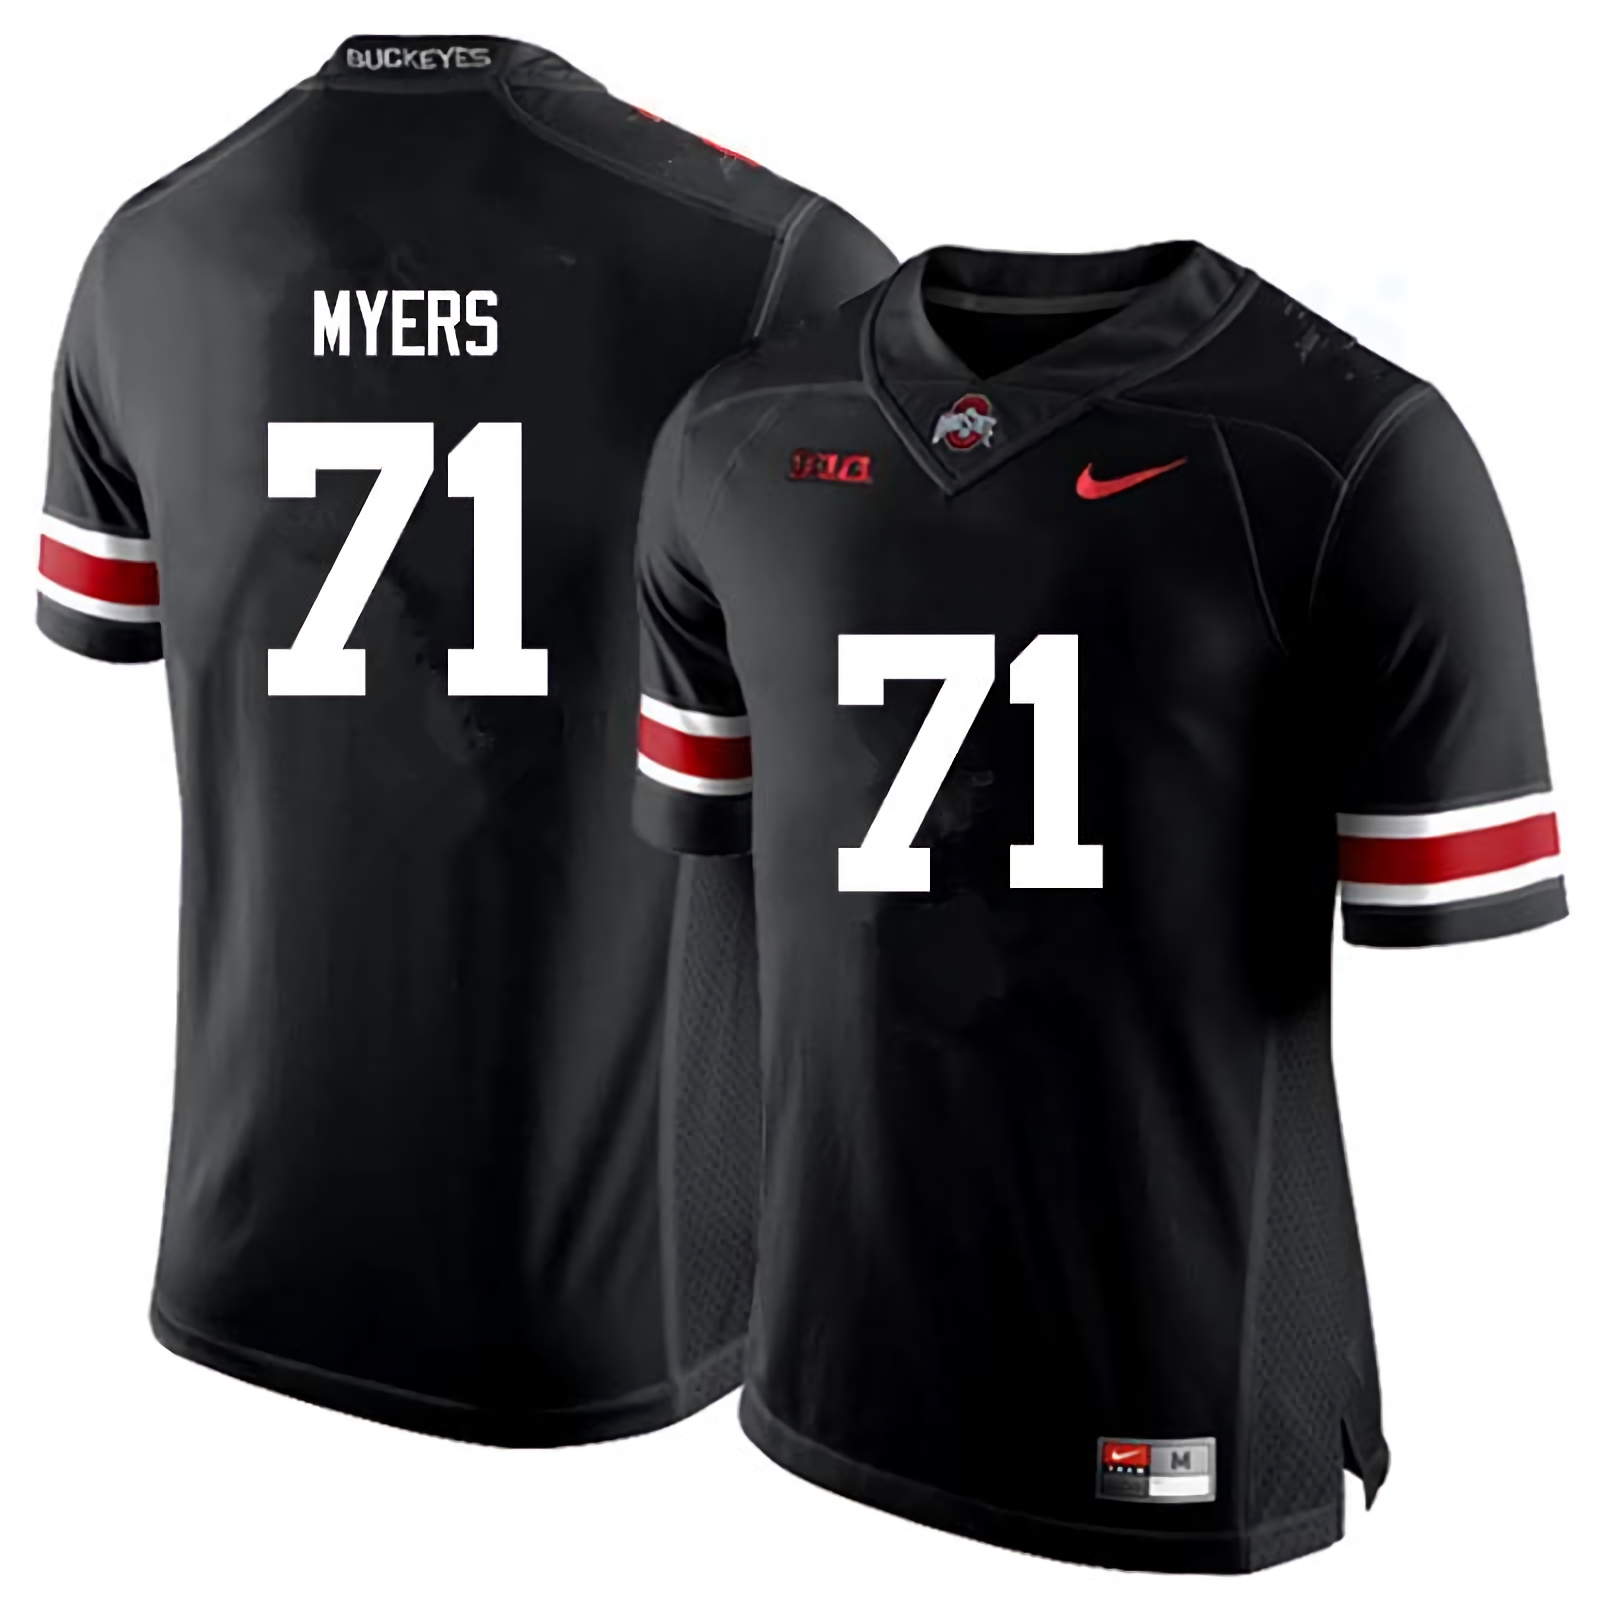 Josh Myers Ohio State Buckeyes Men's NCAA #71 Nike Black College Stitched Football Jersey KVP3456CQ